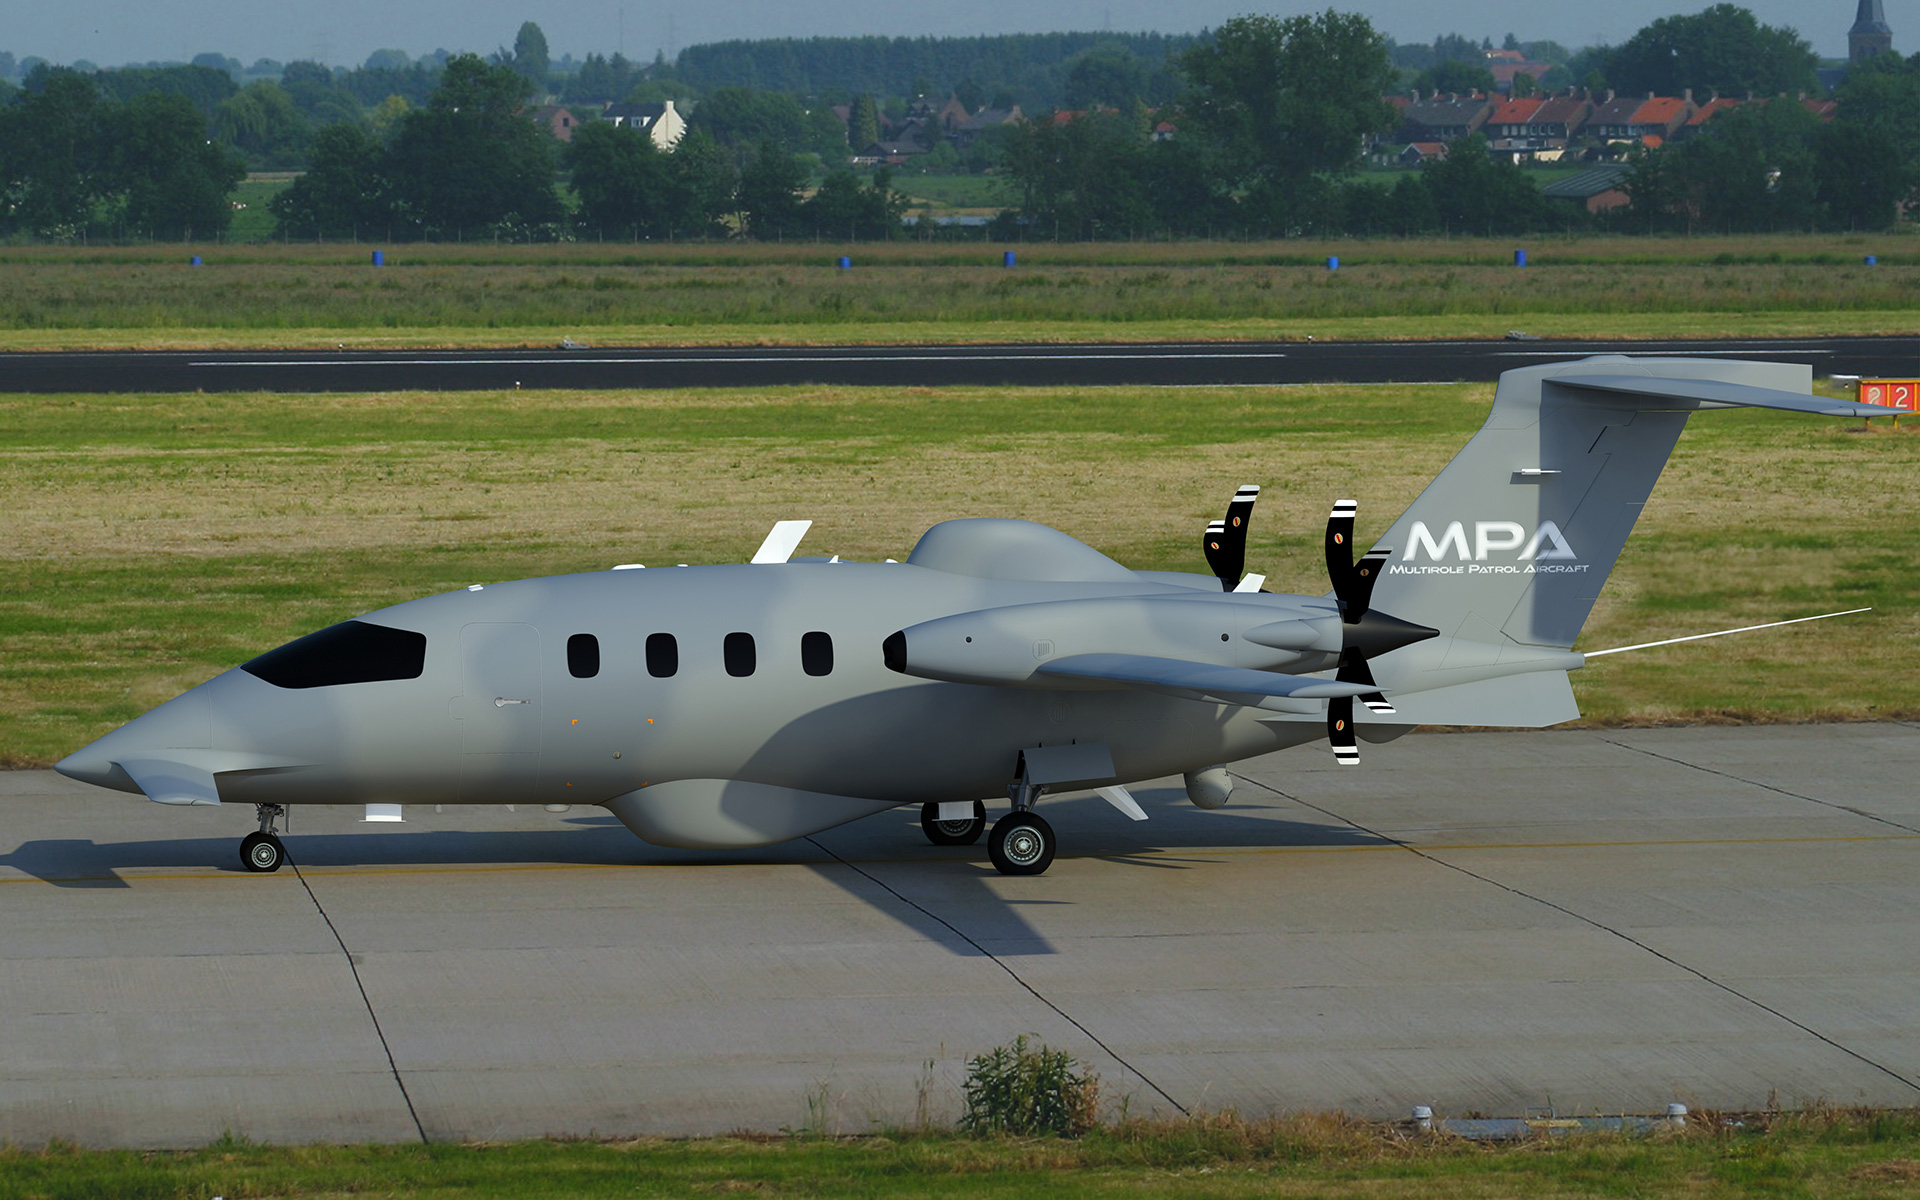  Piaggio Aerospace MPA Multirole Patrol Aircraft